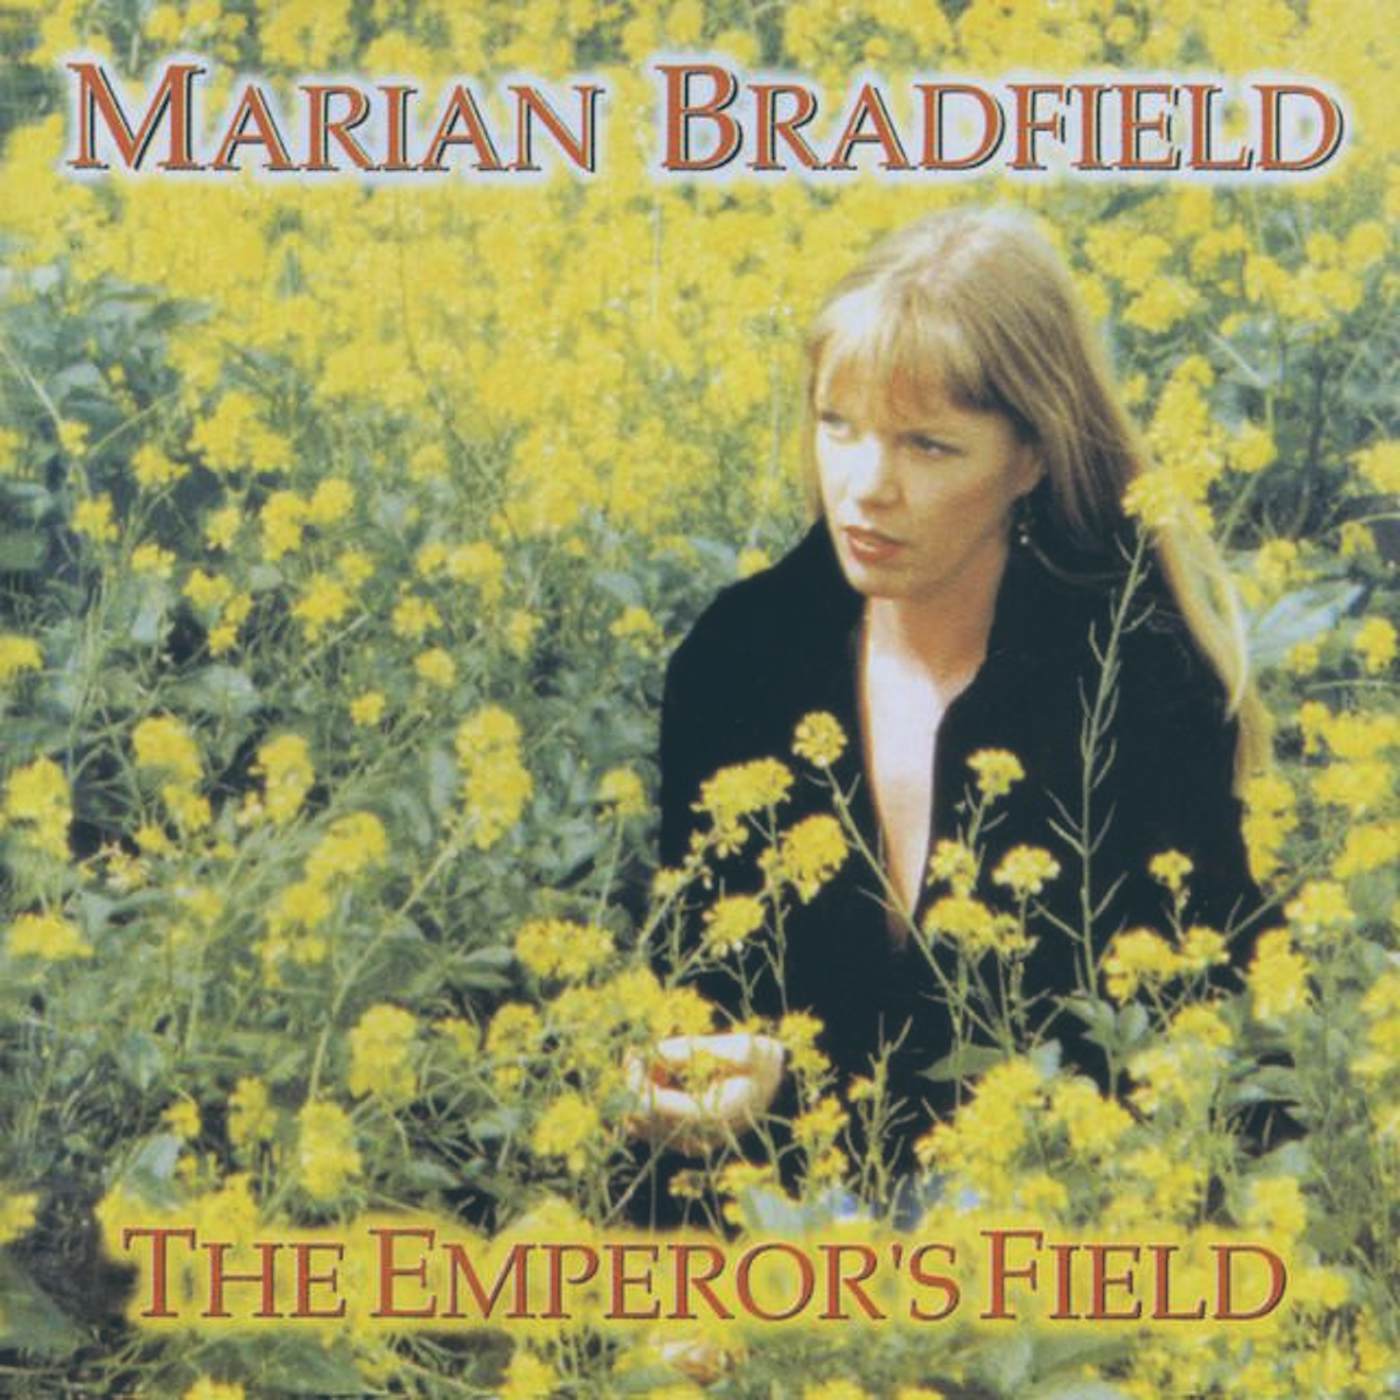 Marian Bradfield